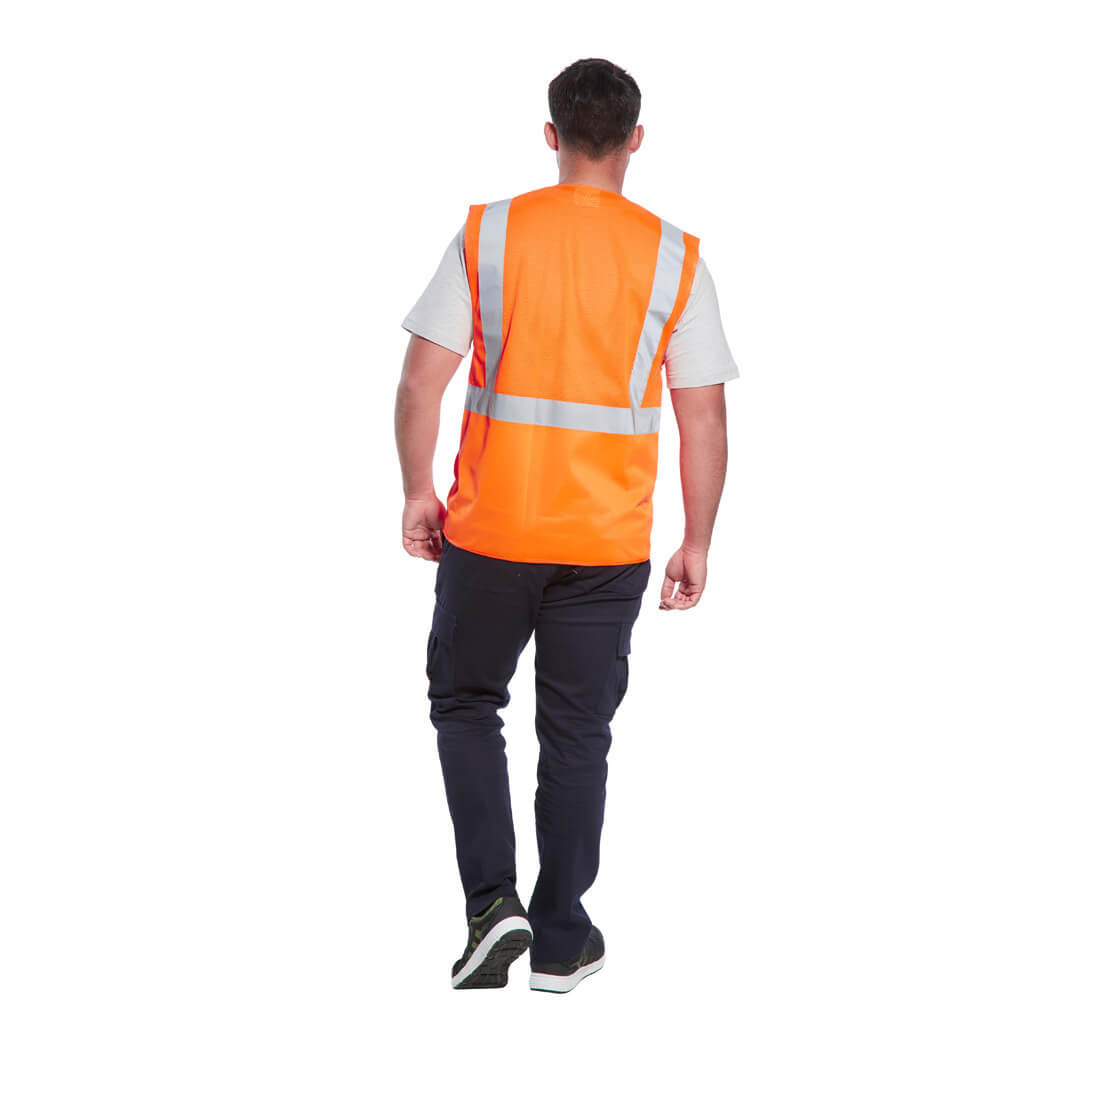 Madrid Executive Mesh Vest - Safetywear